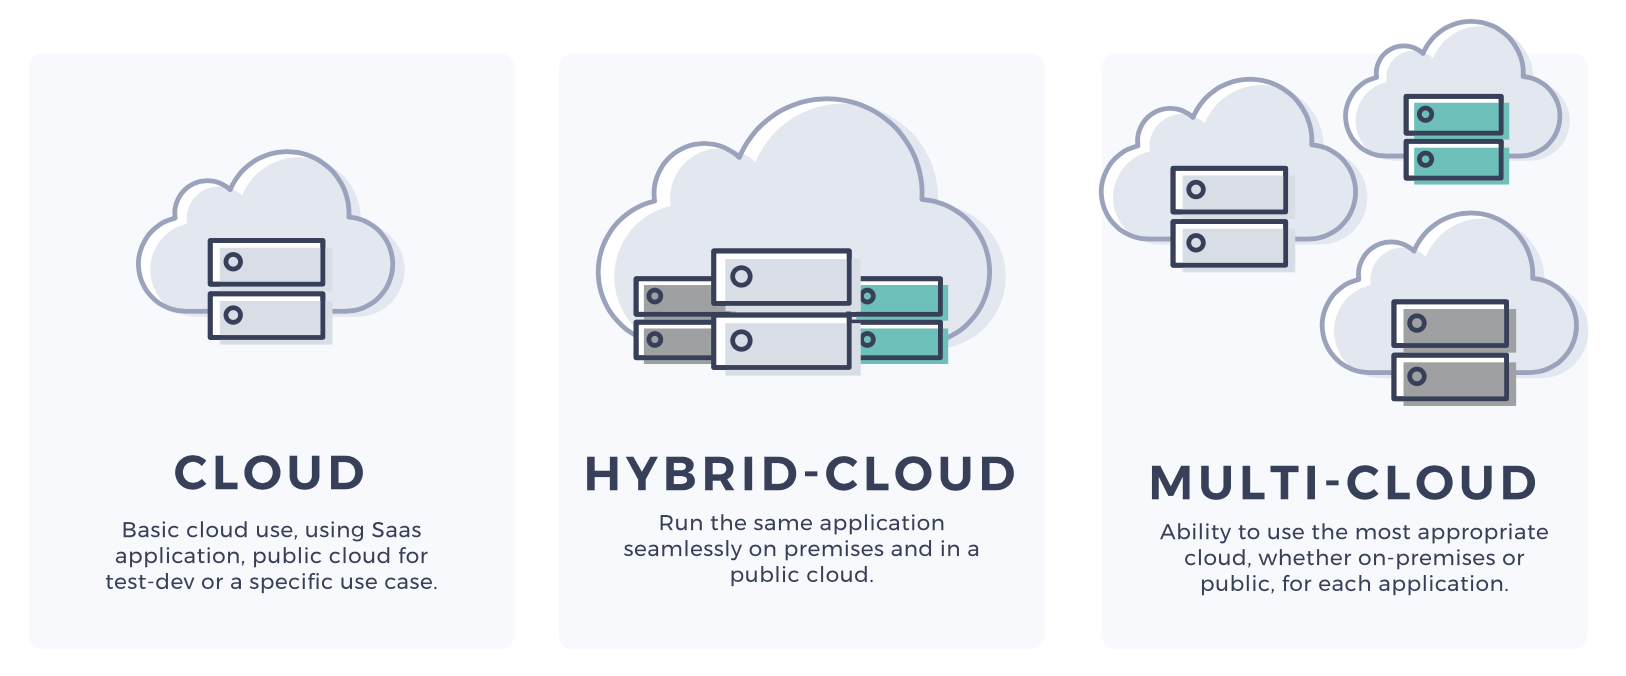 multi-cloud vs hybrid cloud 